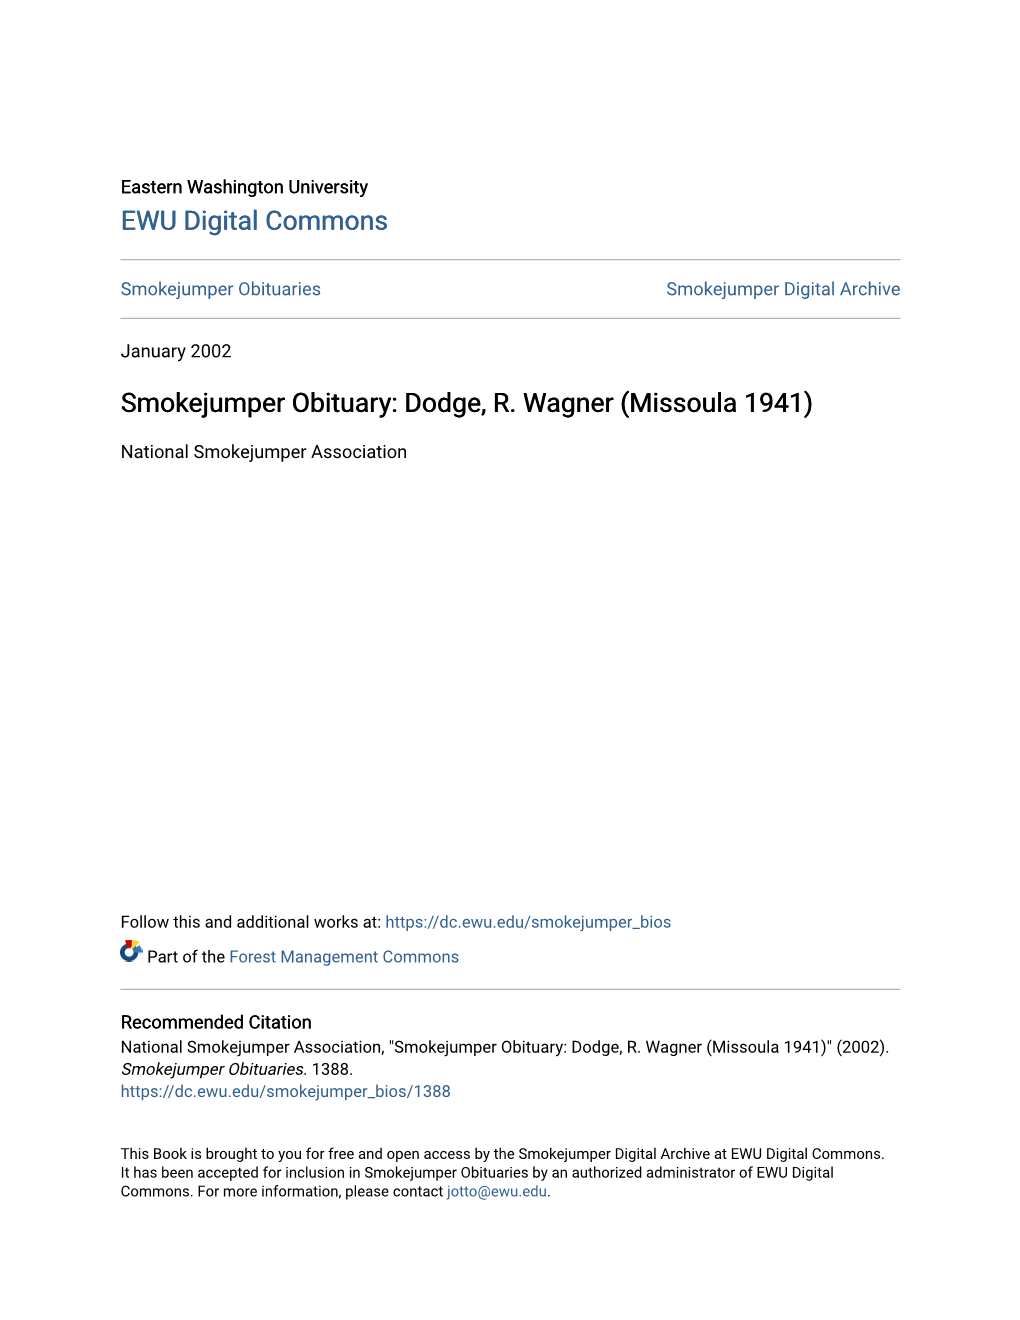 Smokejumper Obituary: Dodge, R. Wagner (Missoula 1941)